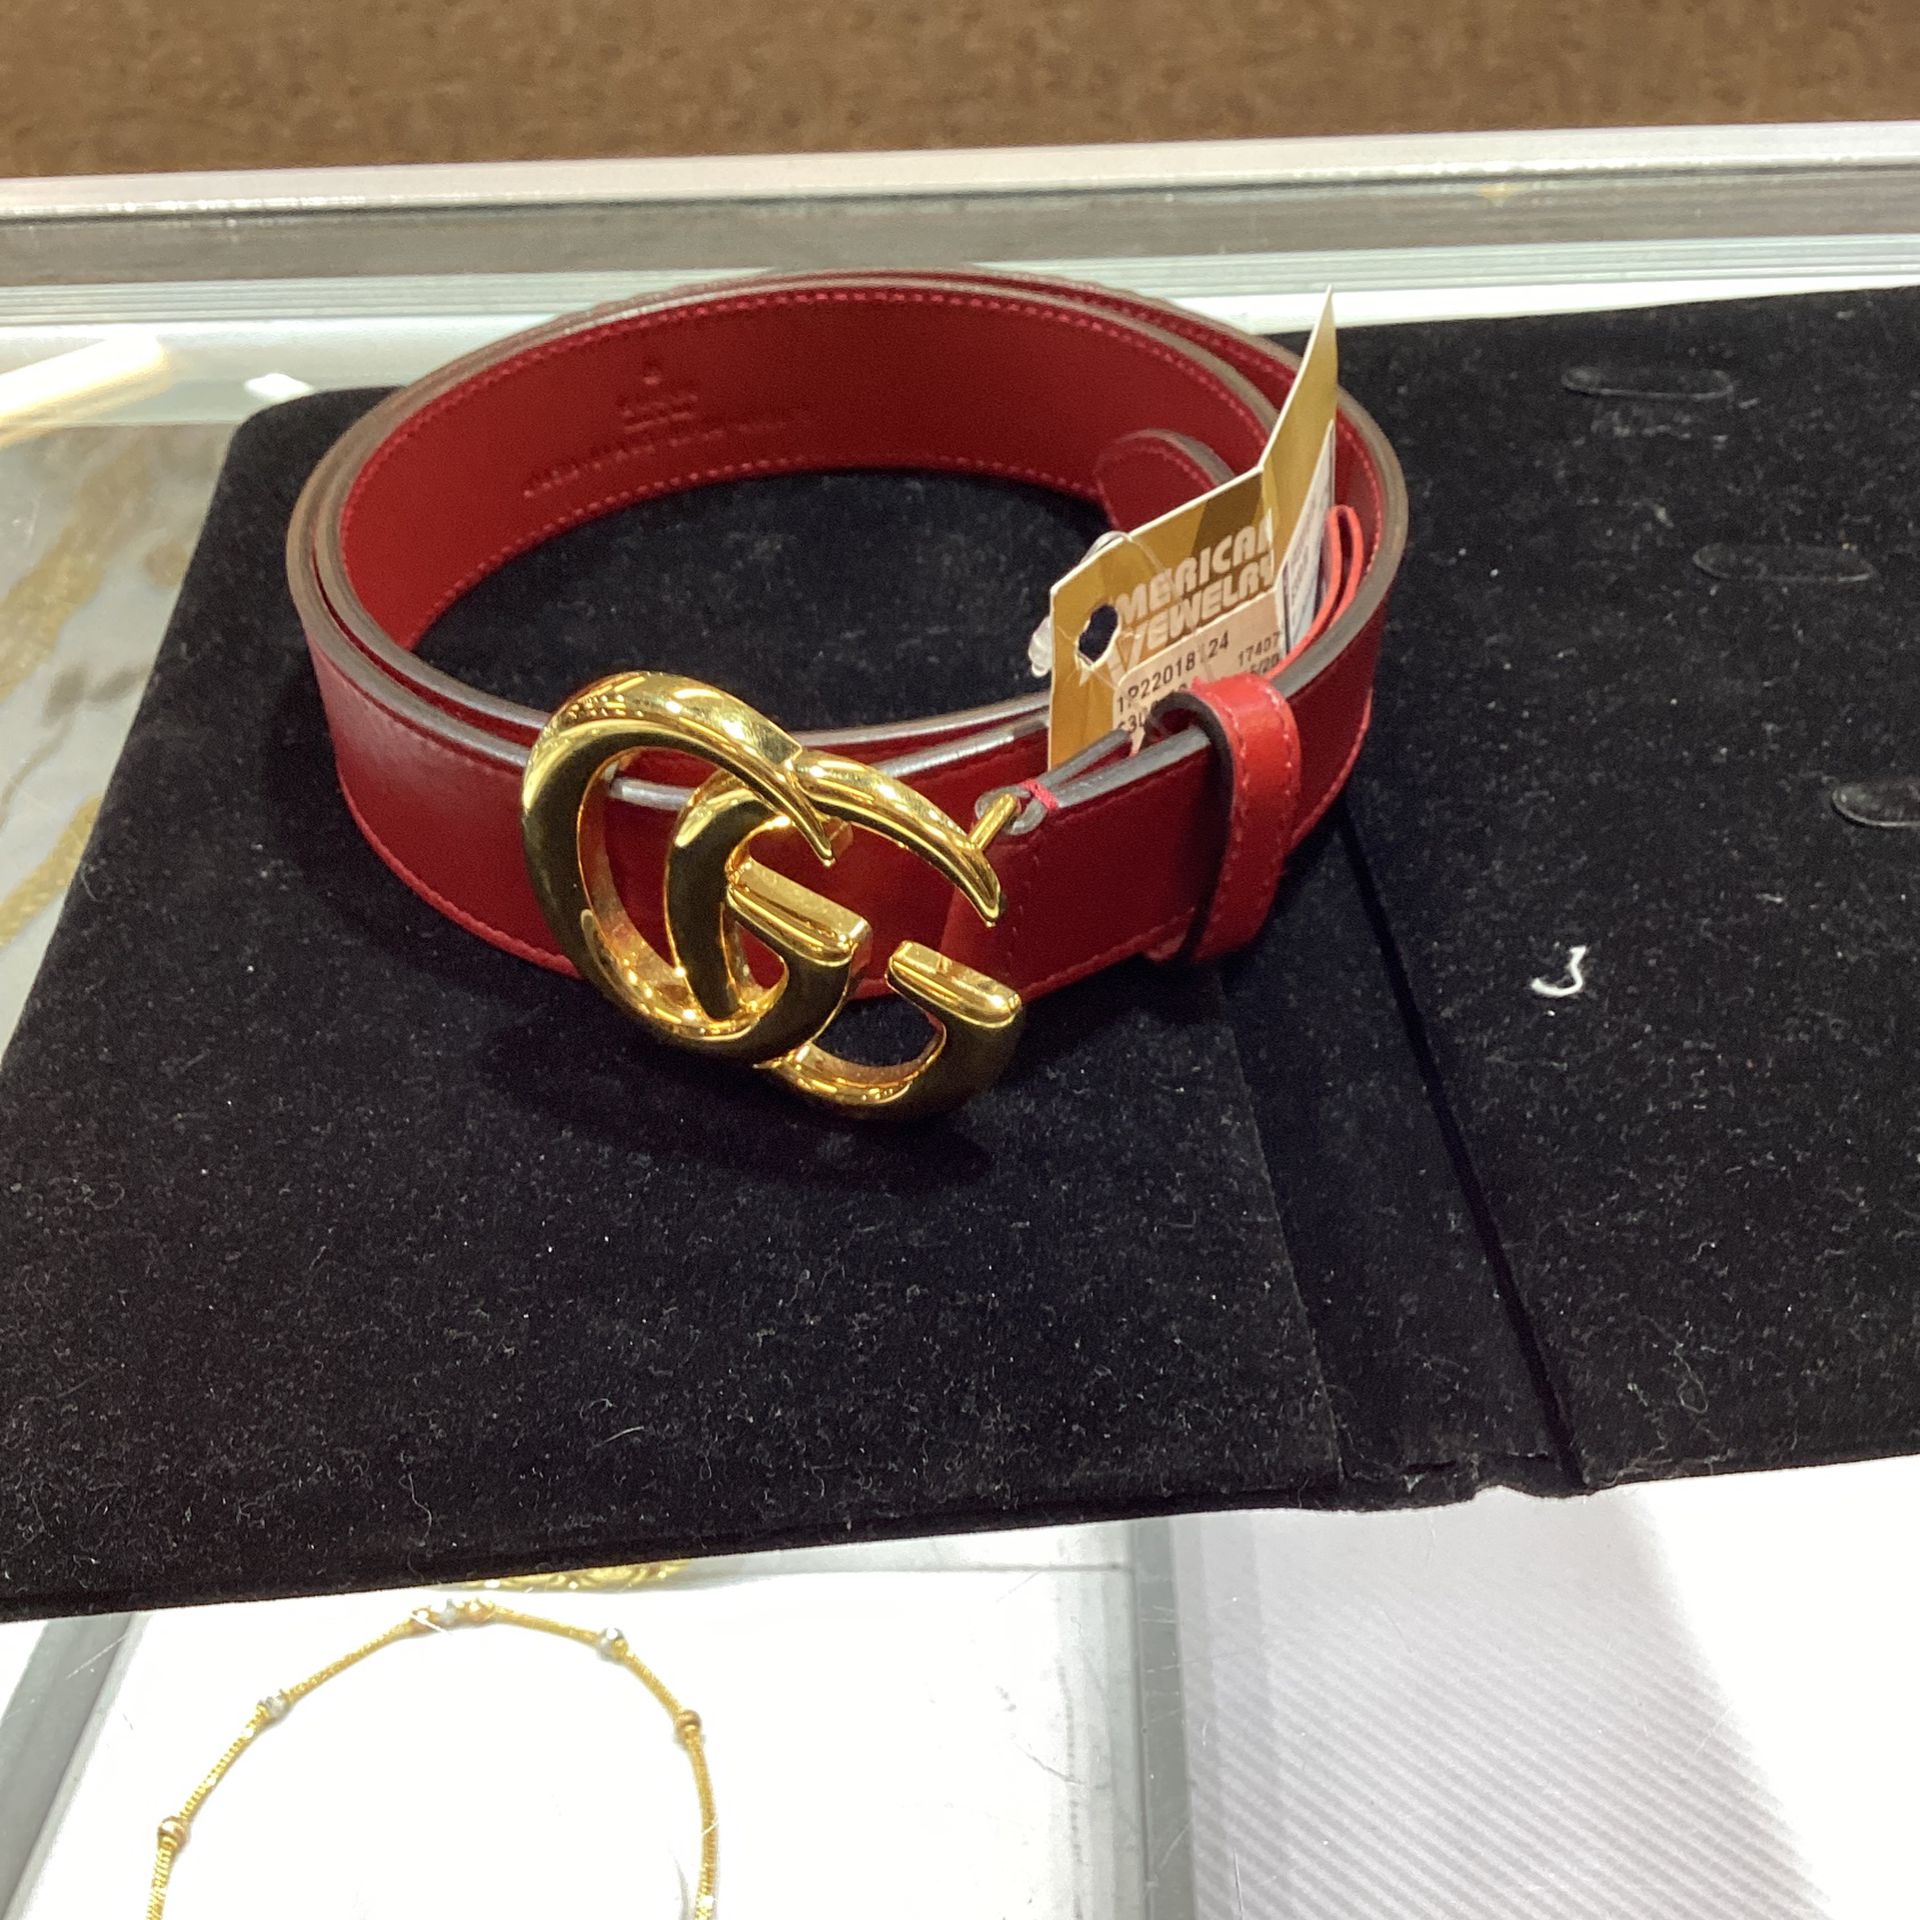 Gucci belt serial number 121282-3959-80-82 for Sale in Detroit, MI - OfferUp